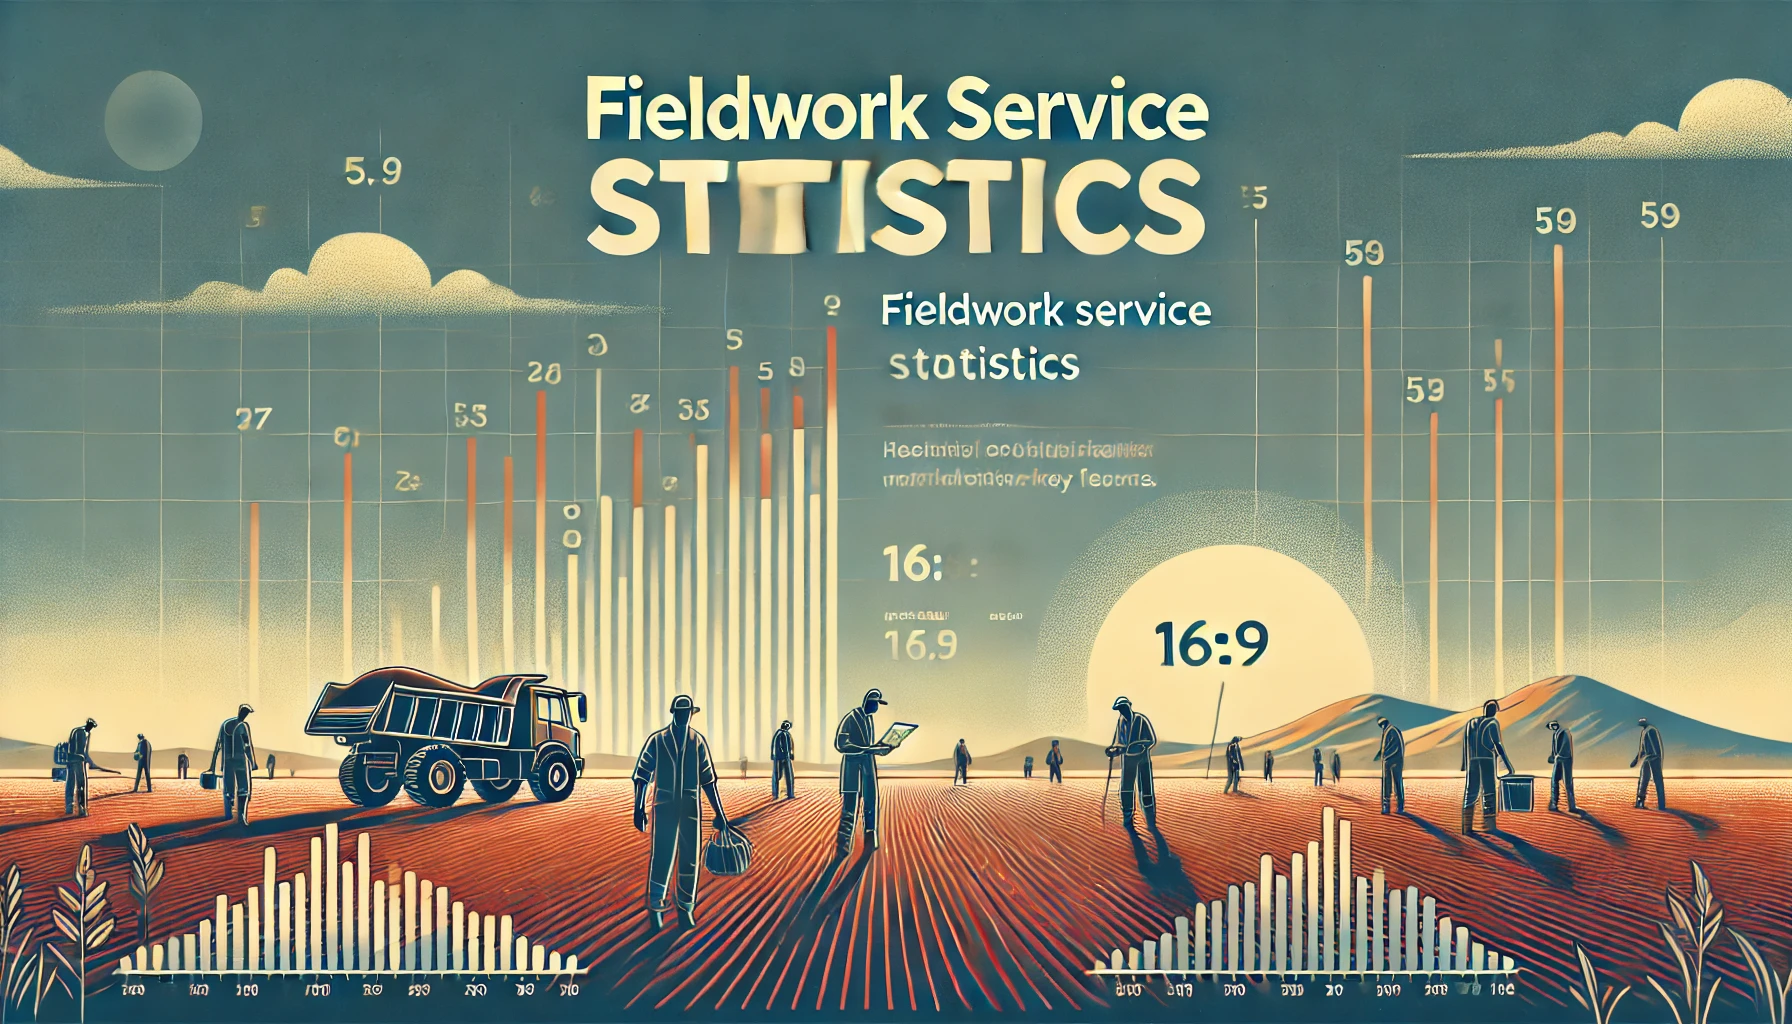 Fieldwork Service Statistics